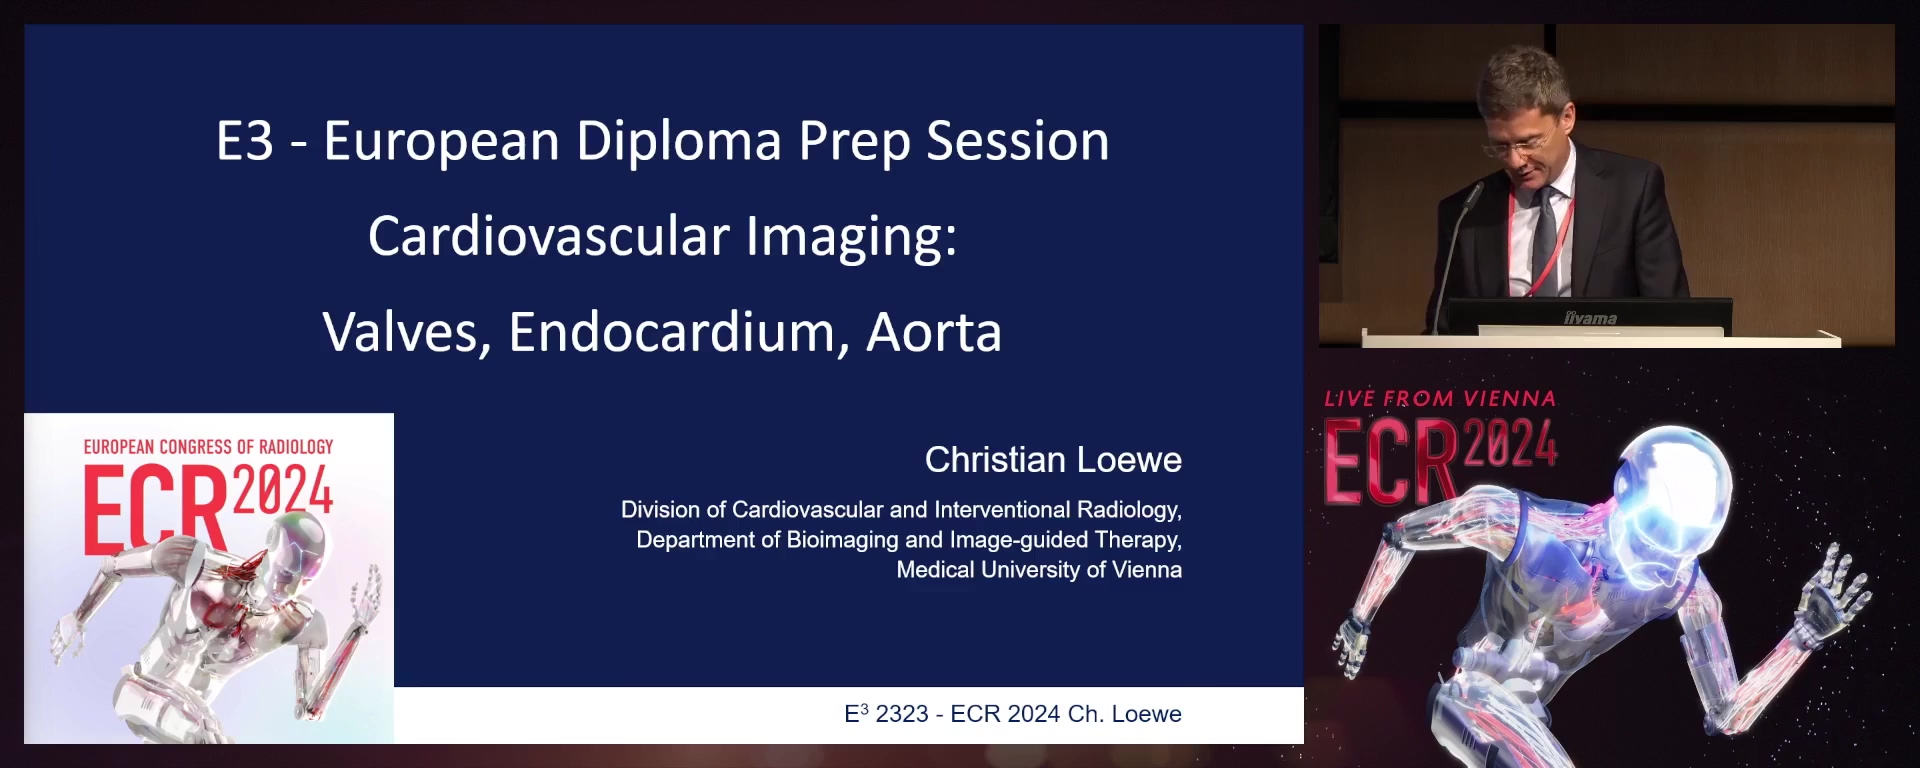 Cardiovascular imaging: valves, endocardium, and aorta